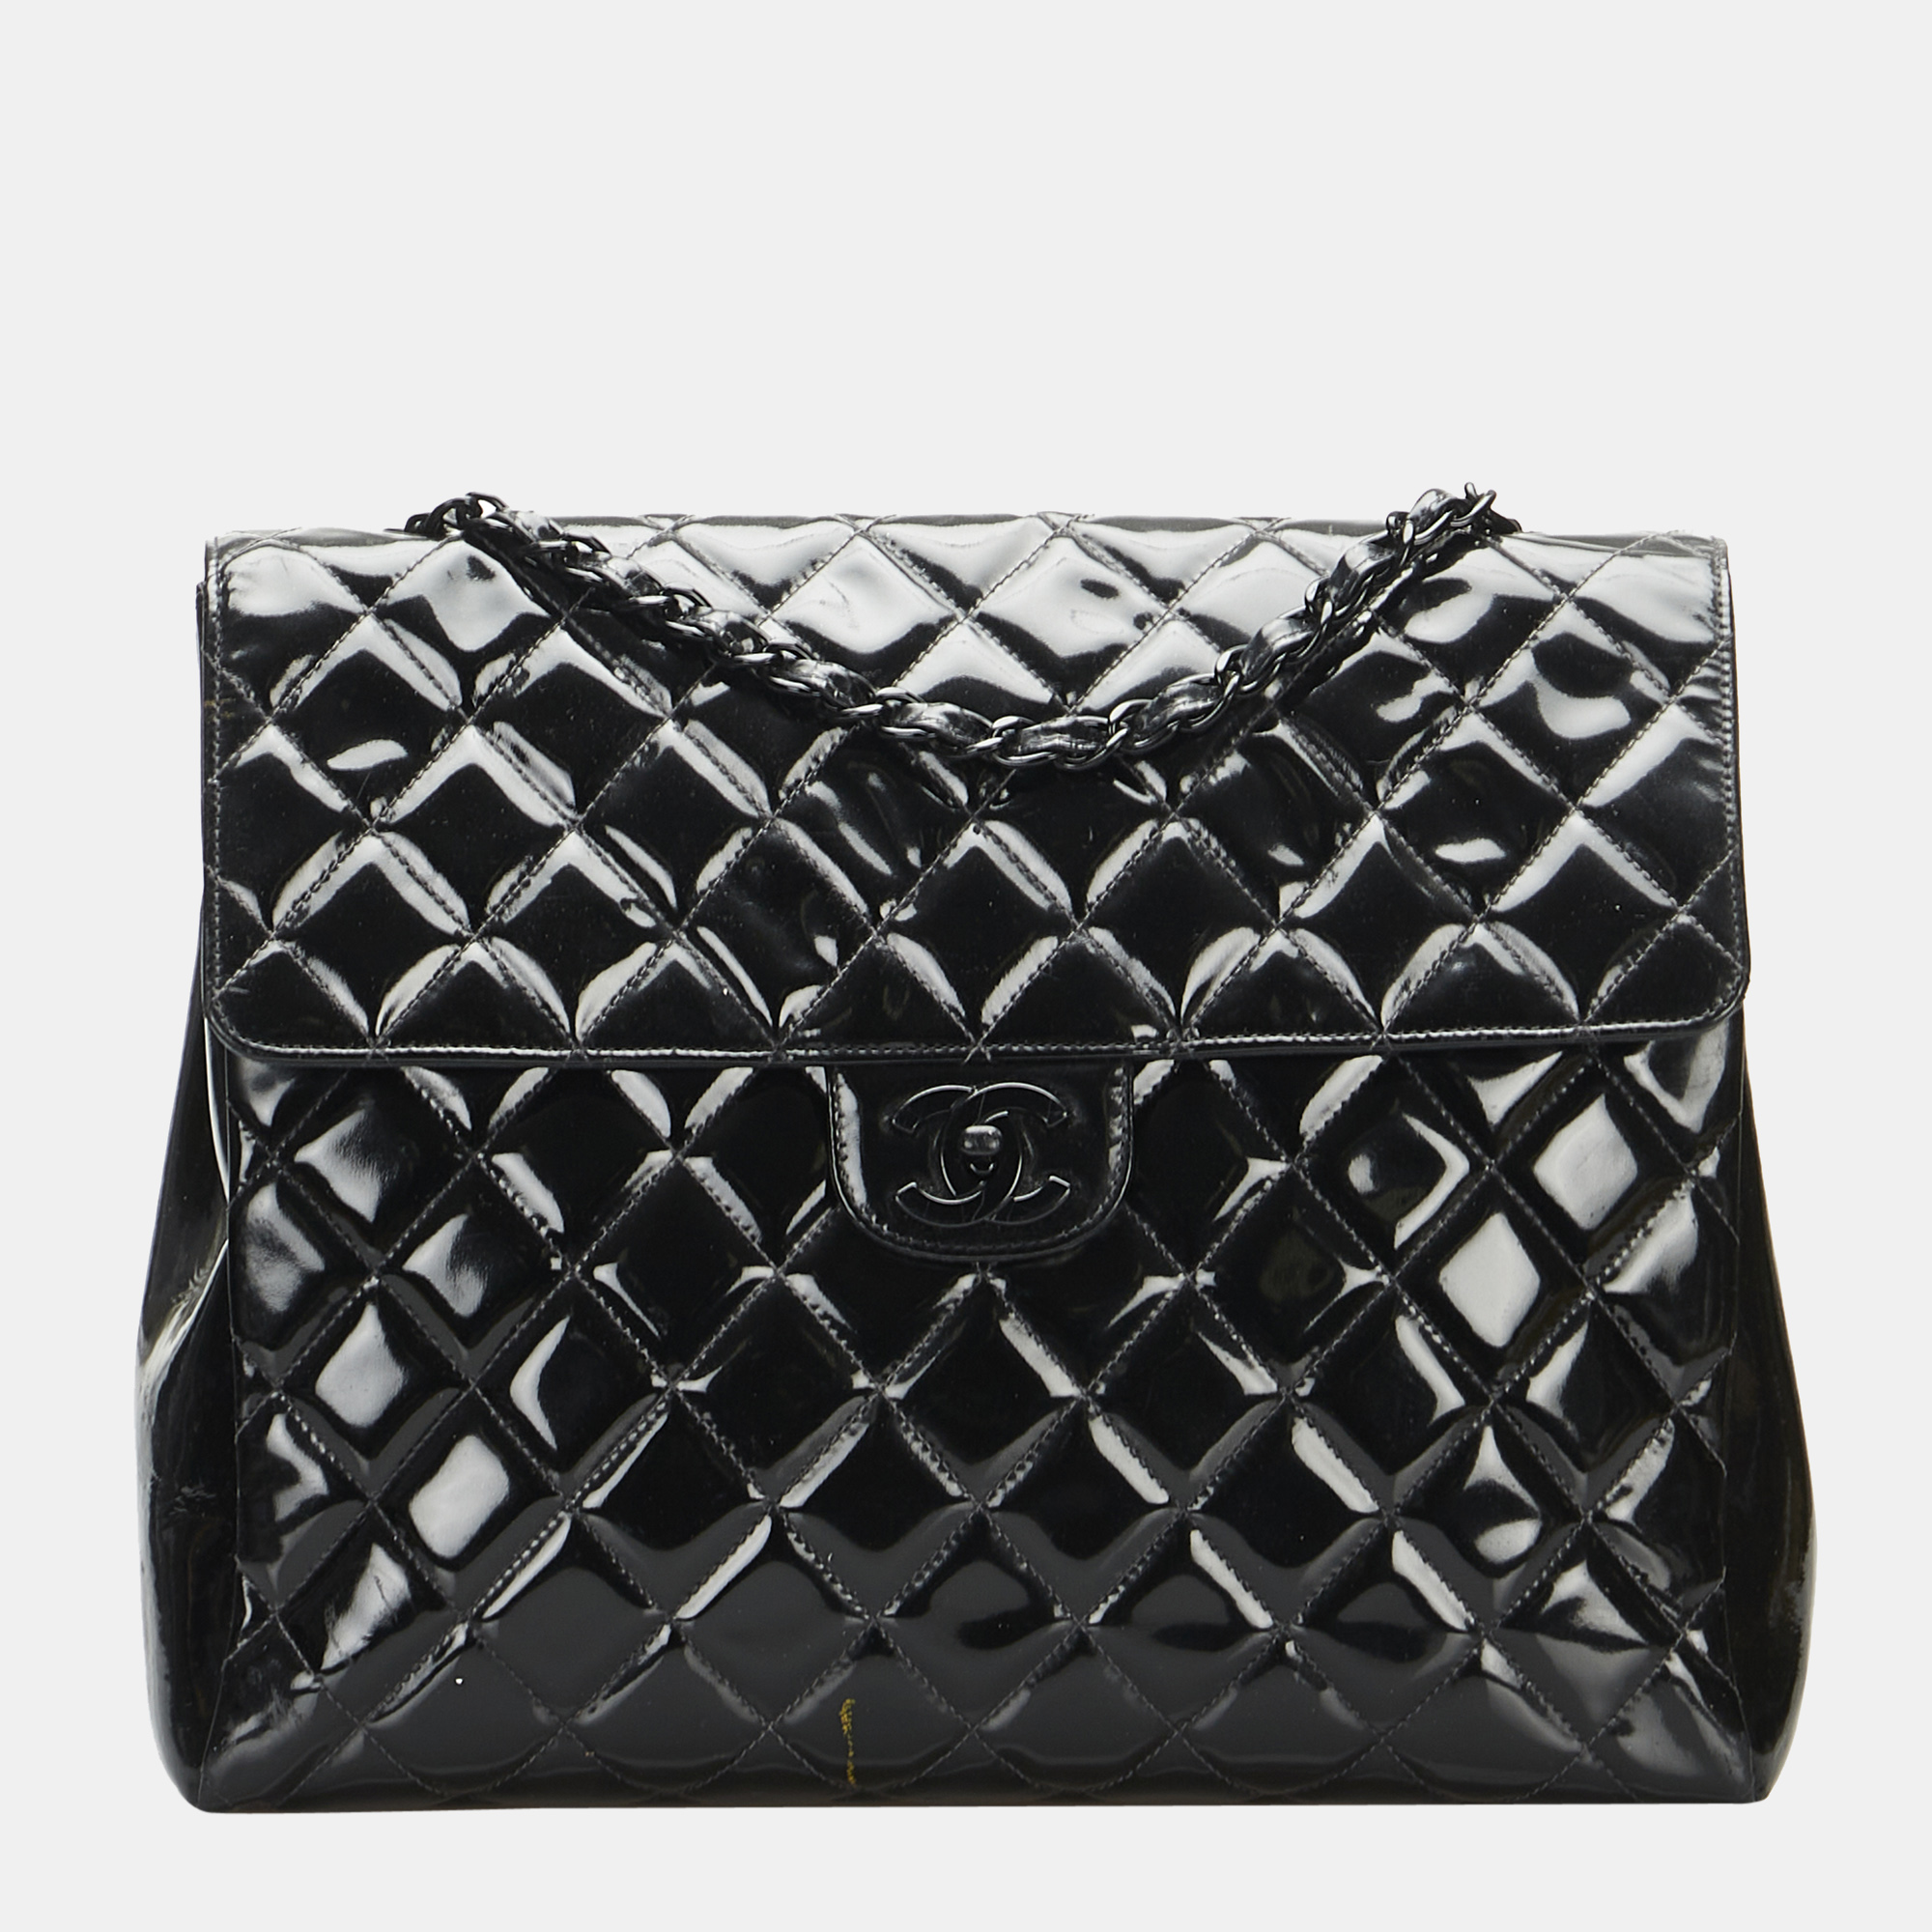 Chanel black matelasse patent leather single flap bag